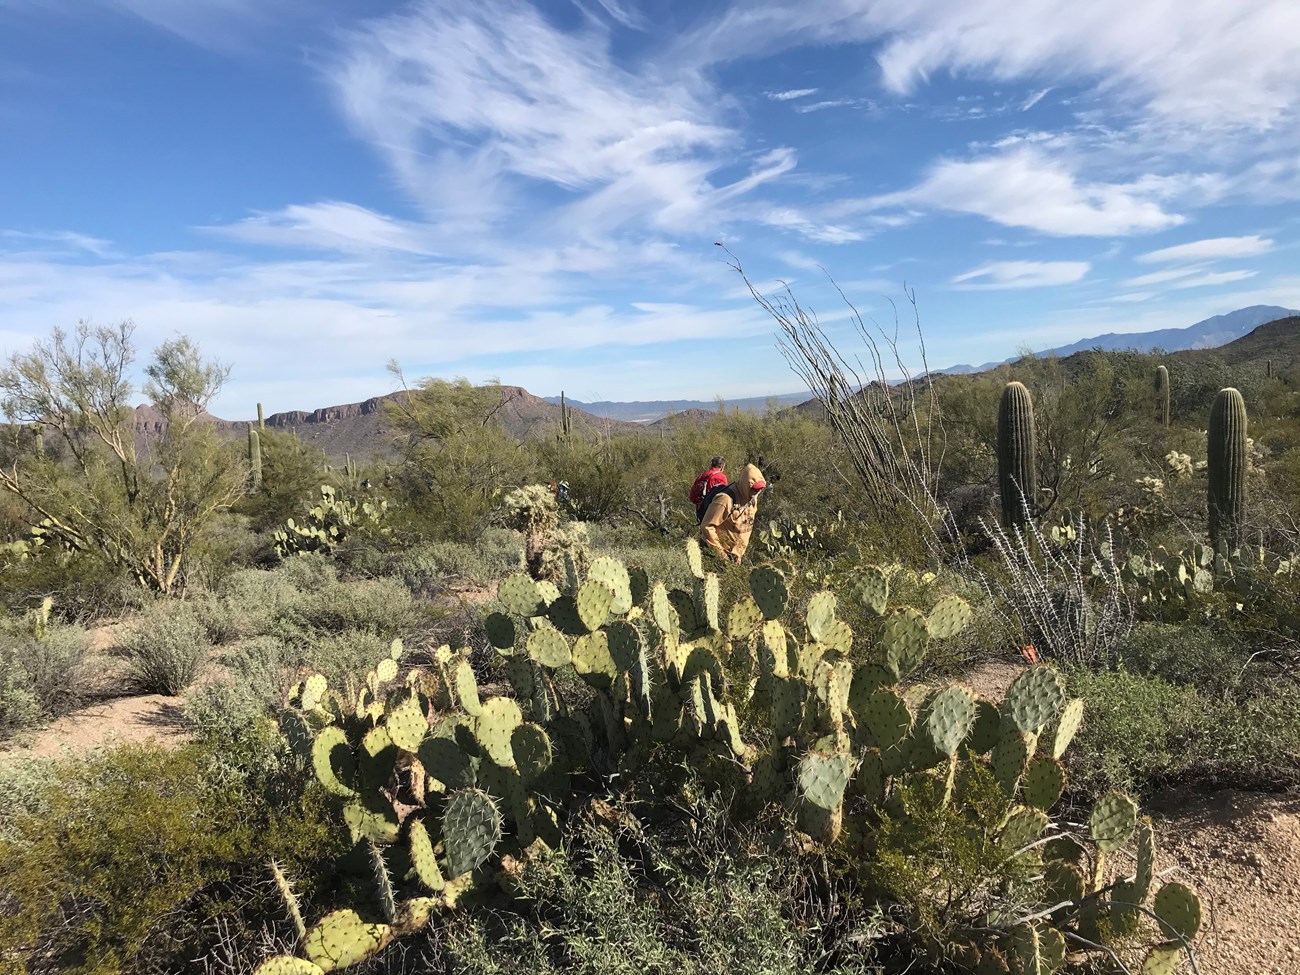 Volunteers navigate the desert landscape